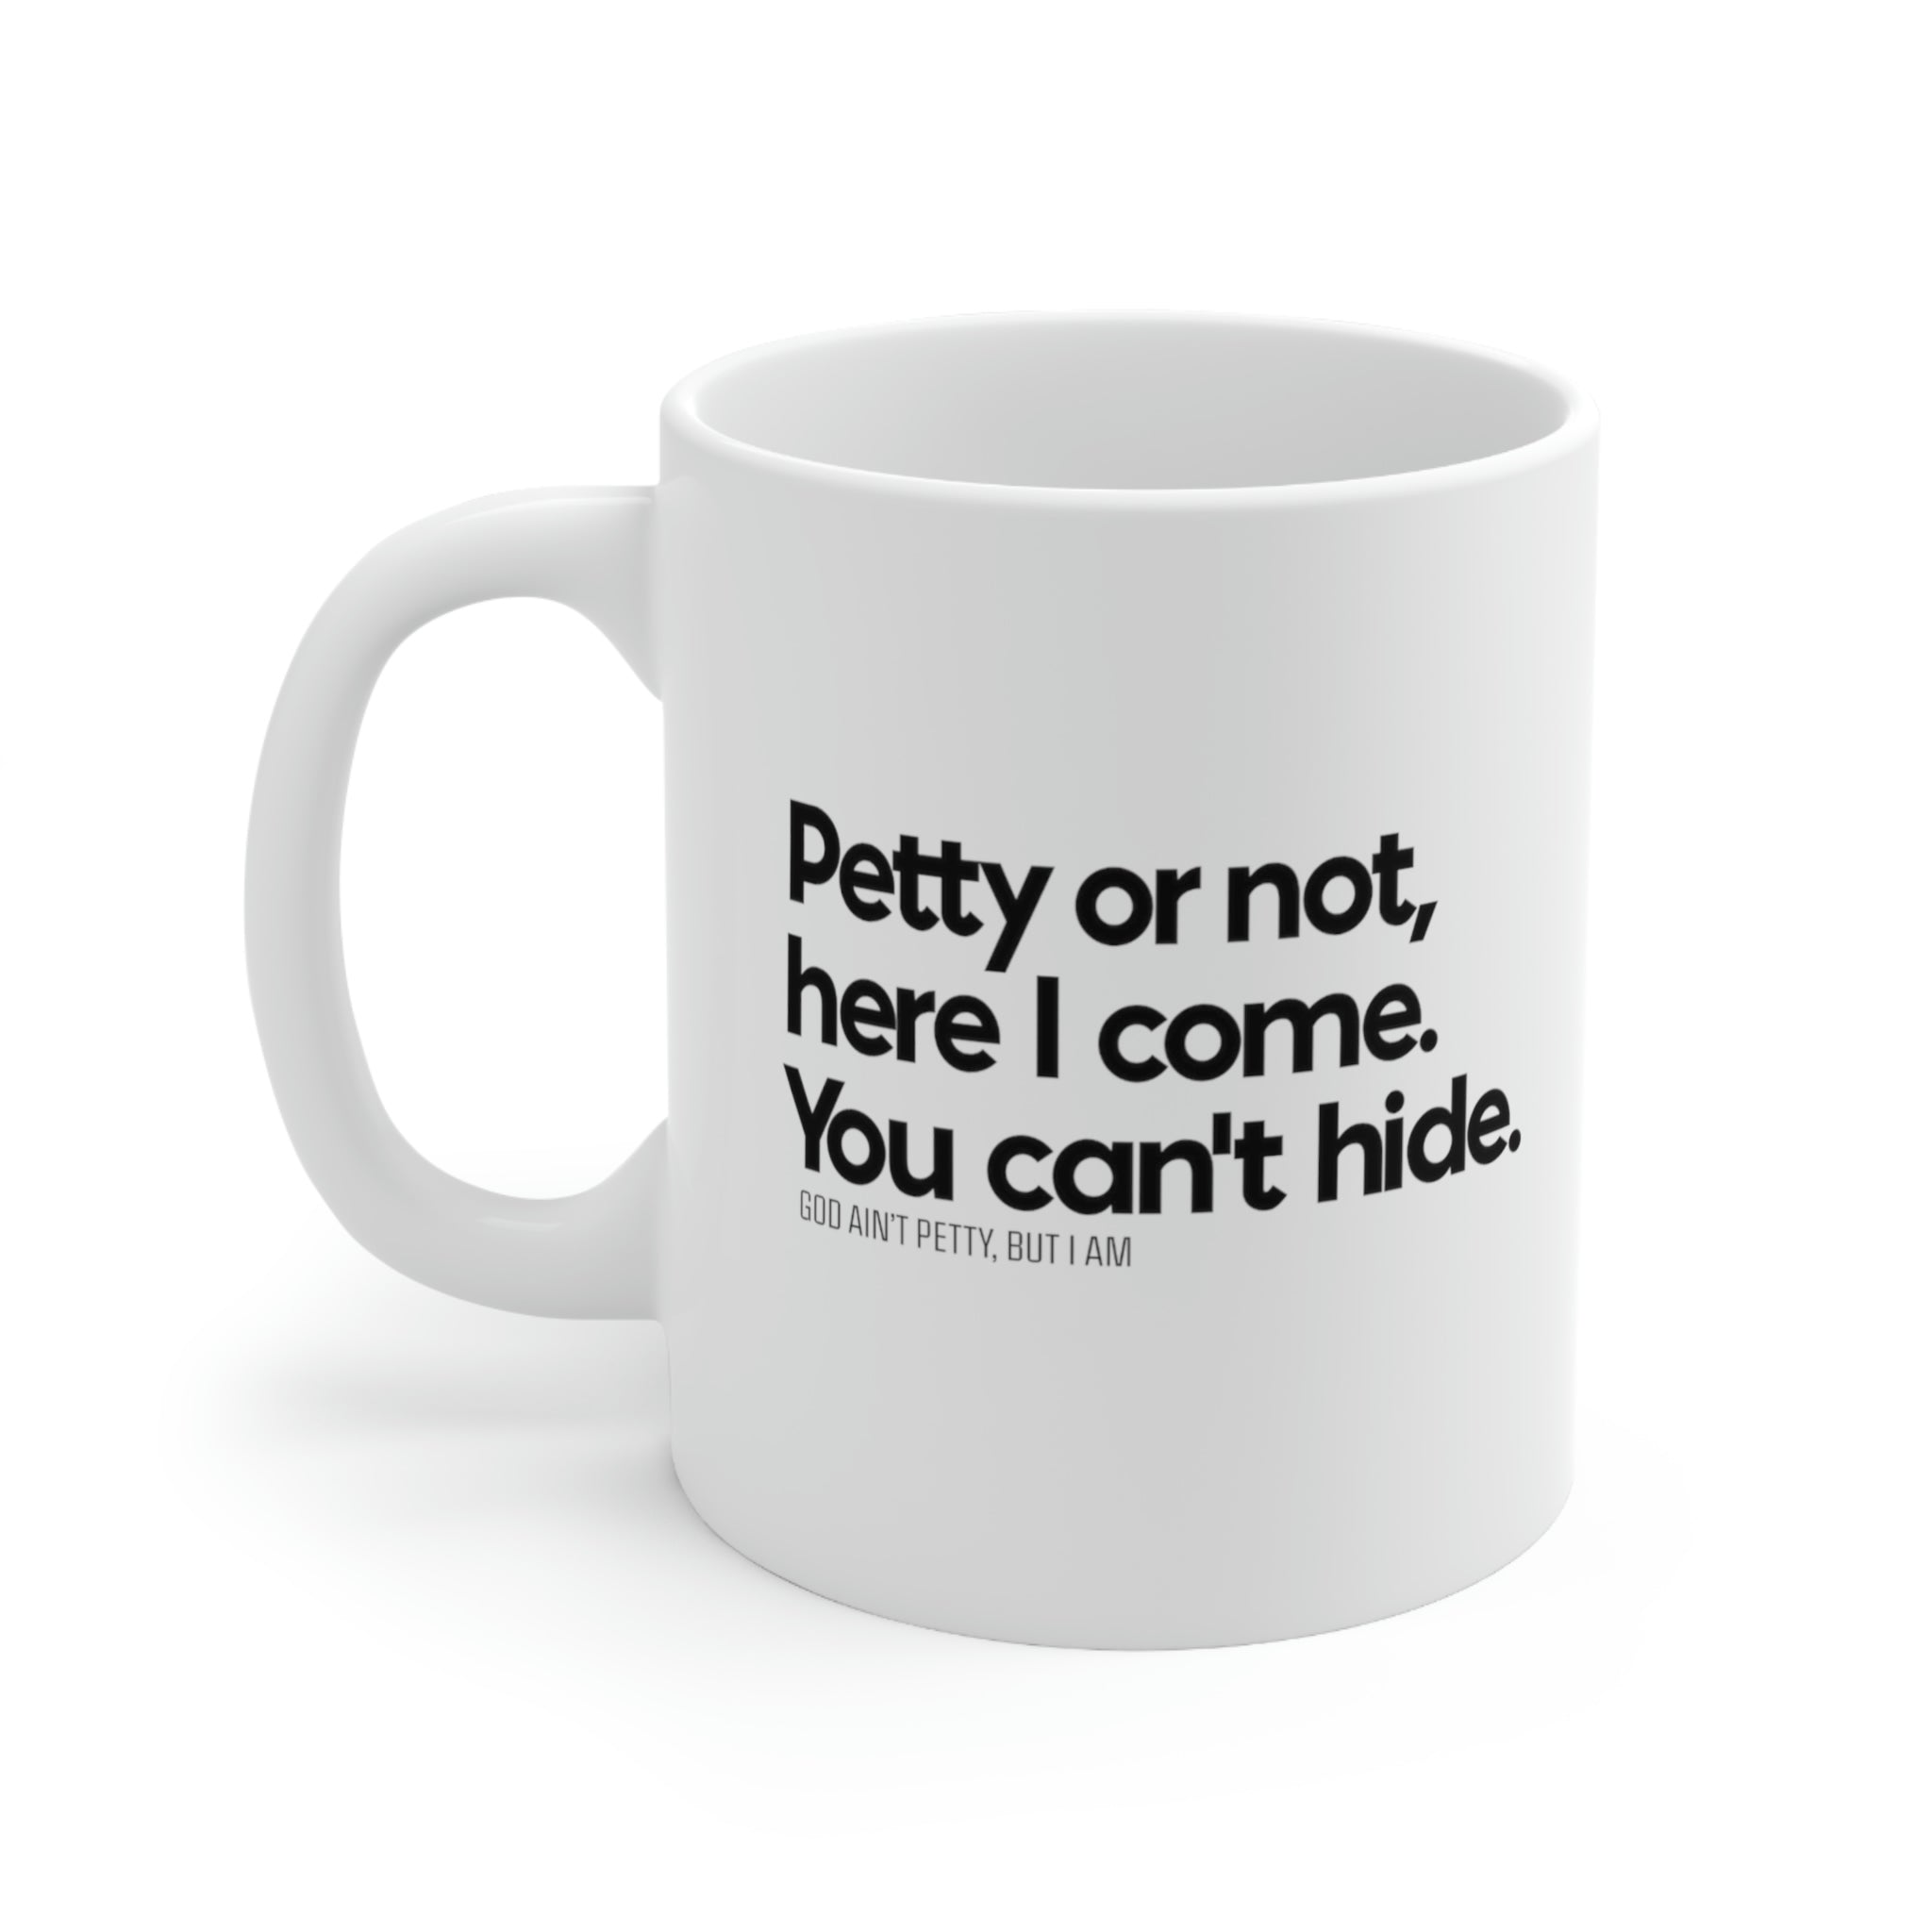 Petty or not, here I come. You can't hide Mug 11oz (White/Black)-Mug-The Original God Ain't Petty But I Am